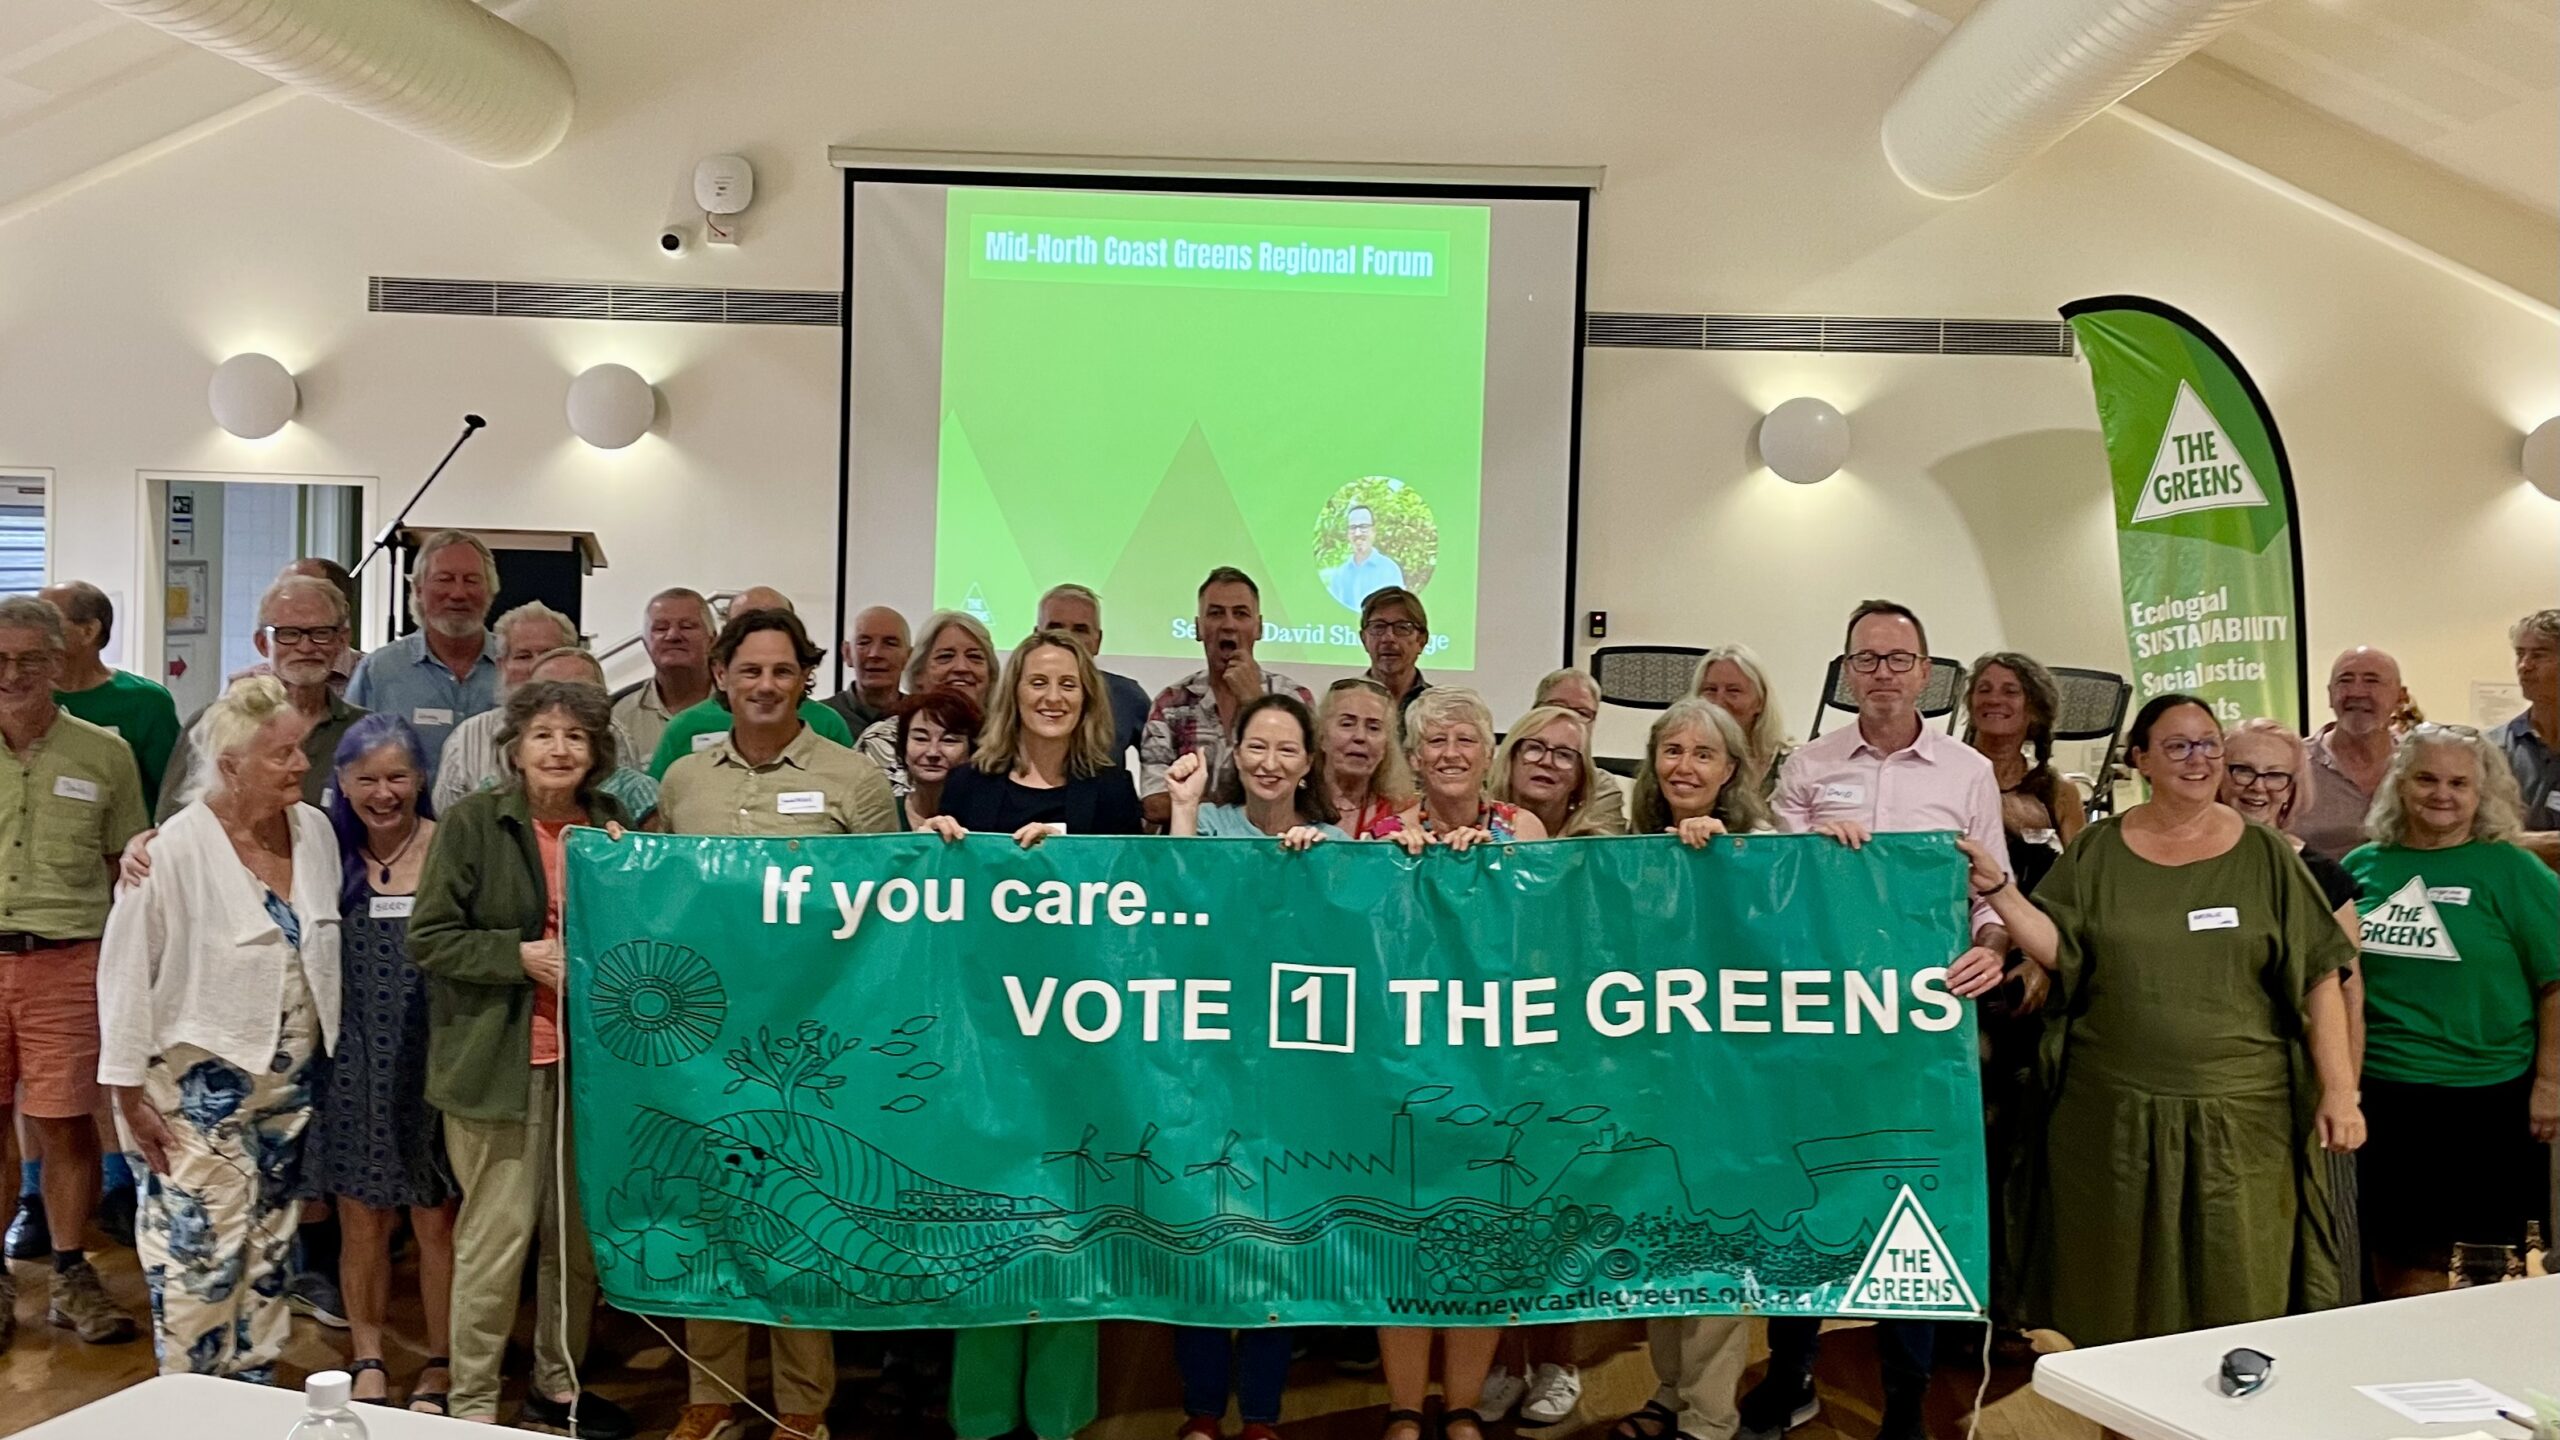 Mid North Coast Regional Greens Forum members Group Photo